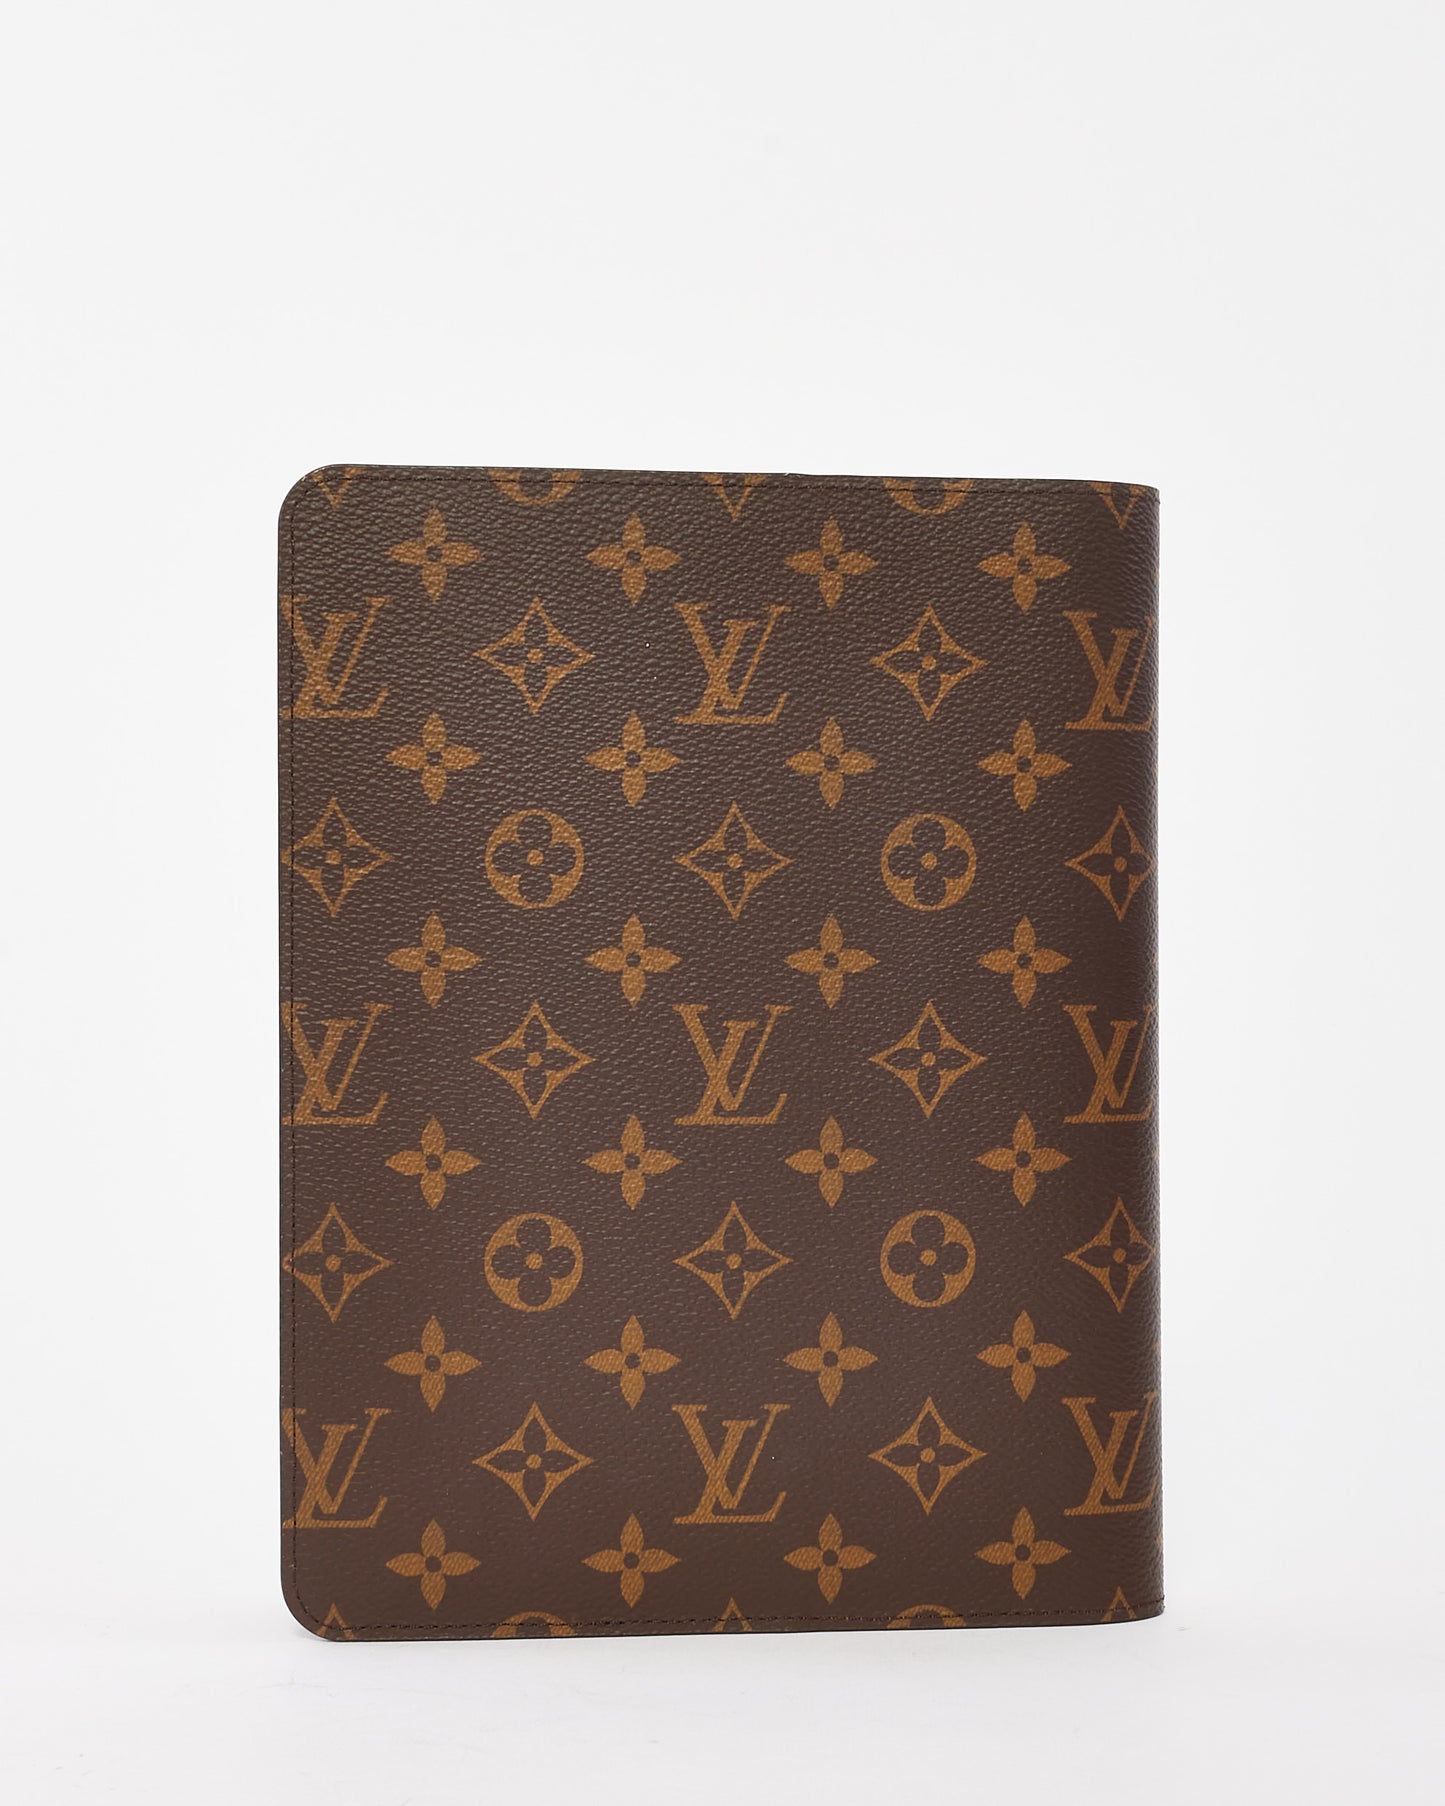 Louis Vuitton Monogram Large Desk Agenda Cover